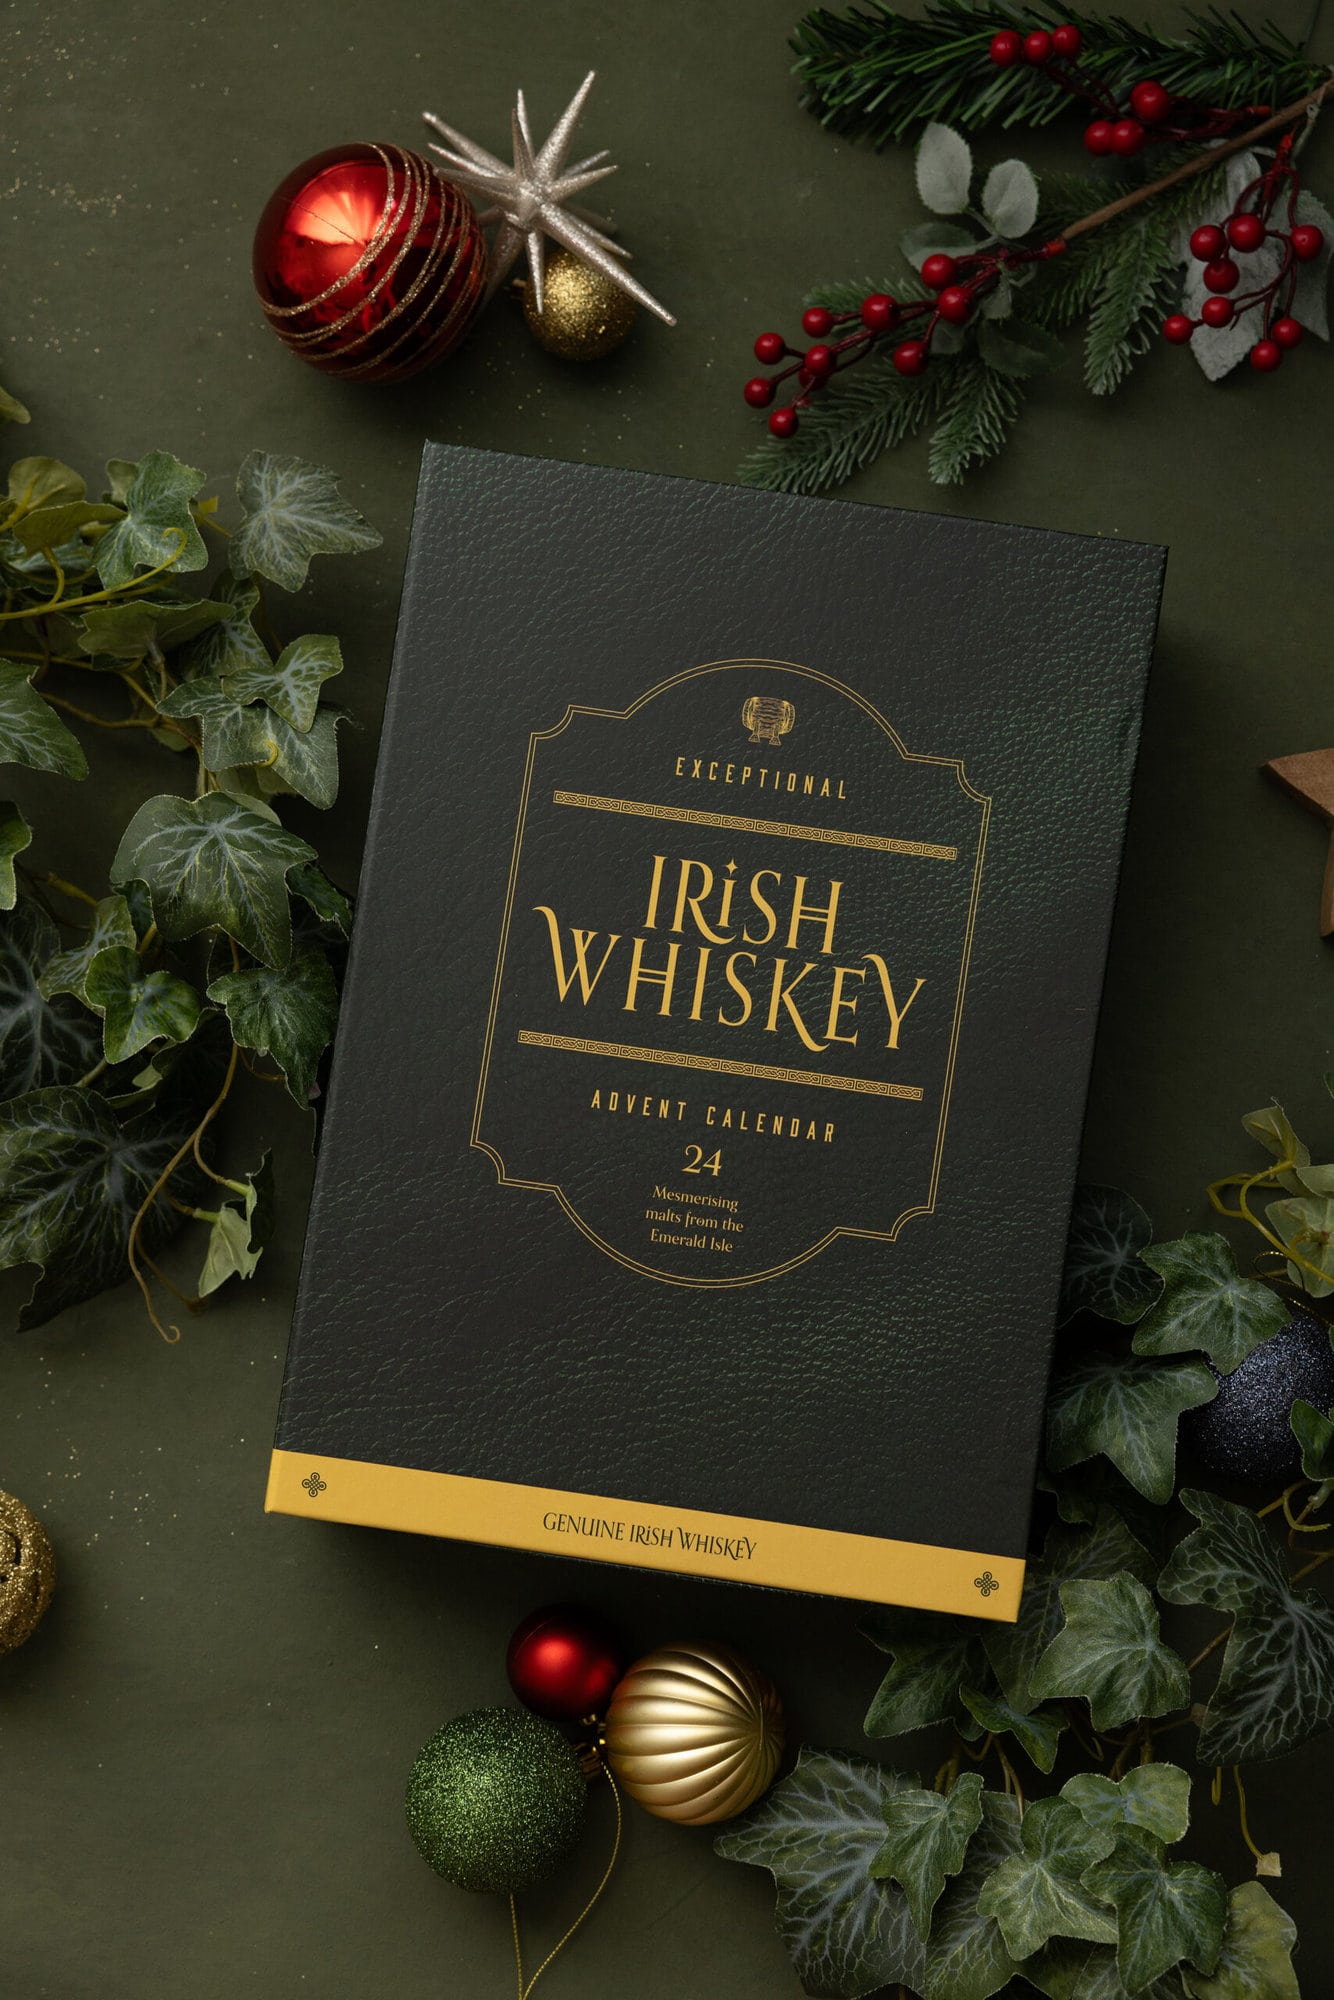 Spirit co. Irish Whiskey Advent Calendar photographed by Alison McKenny